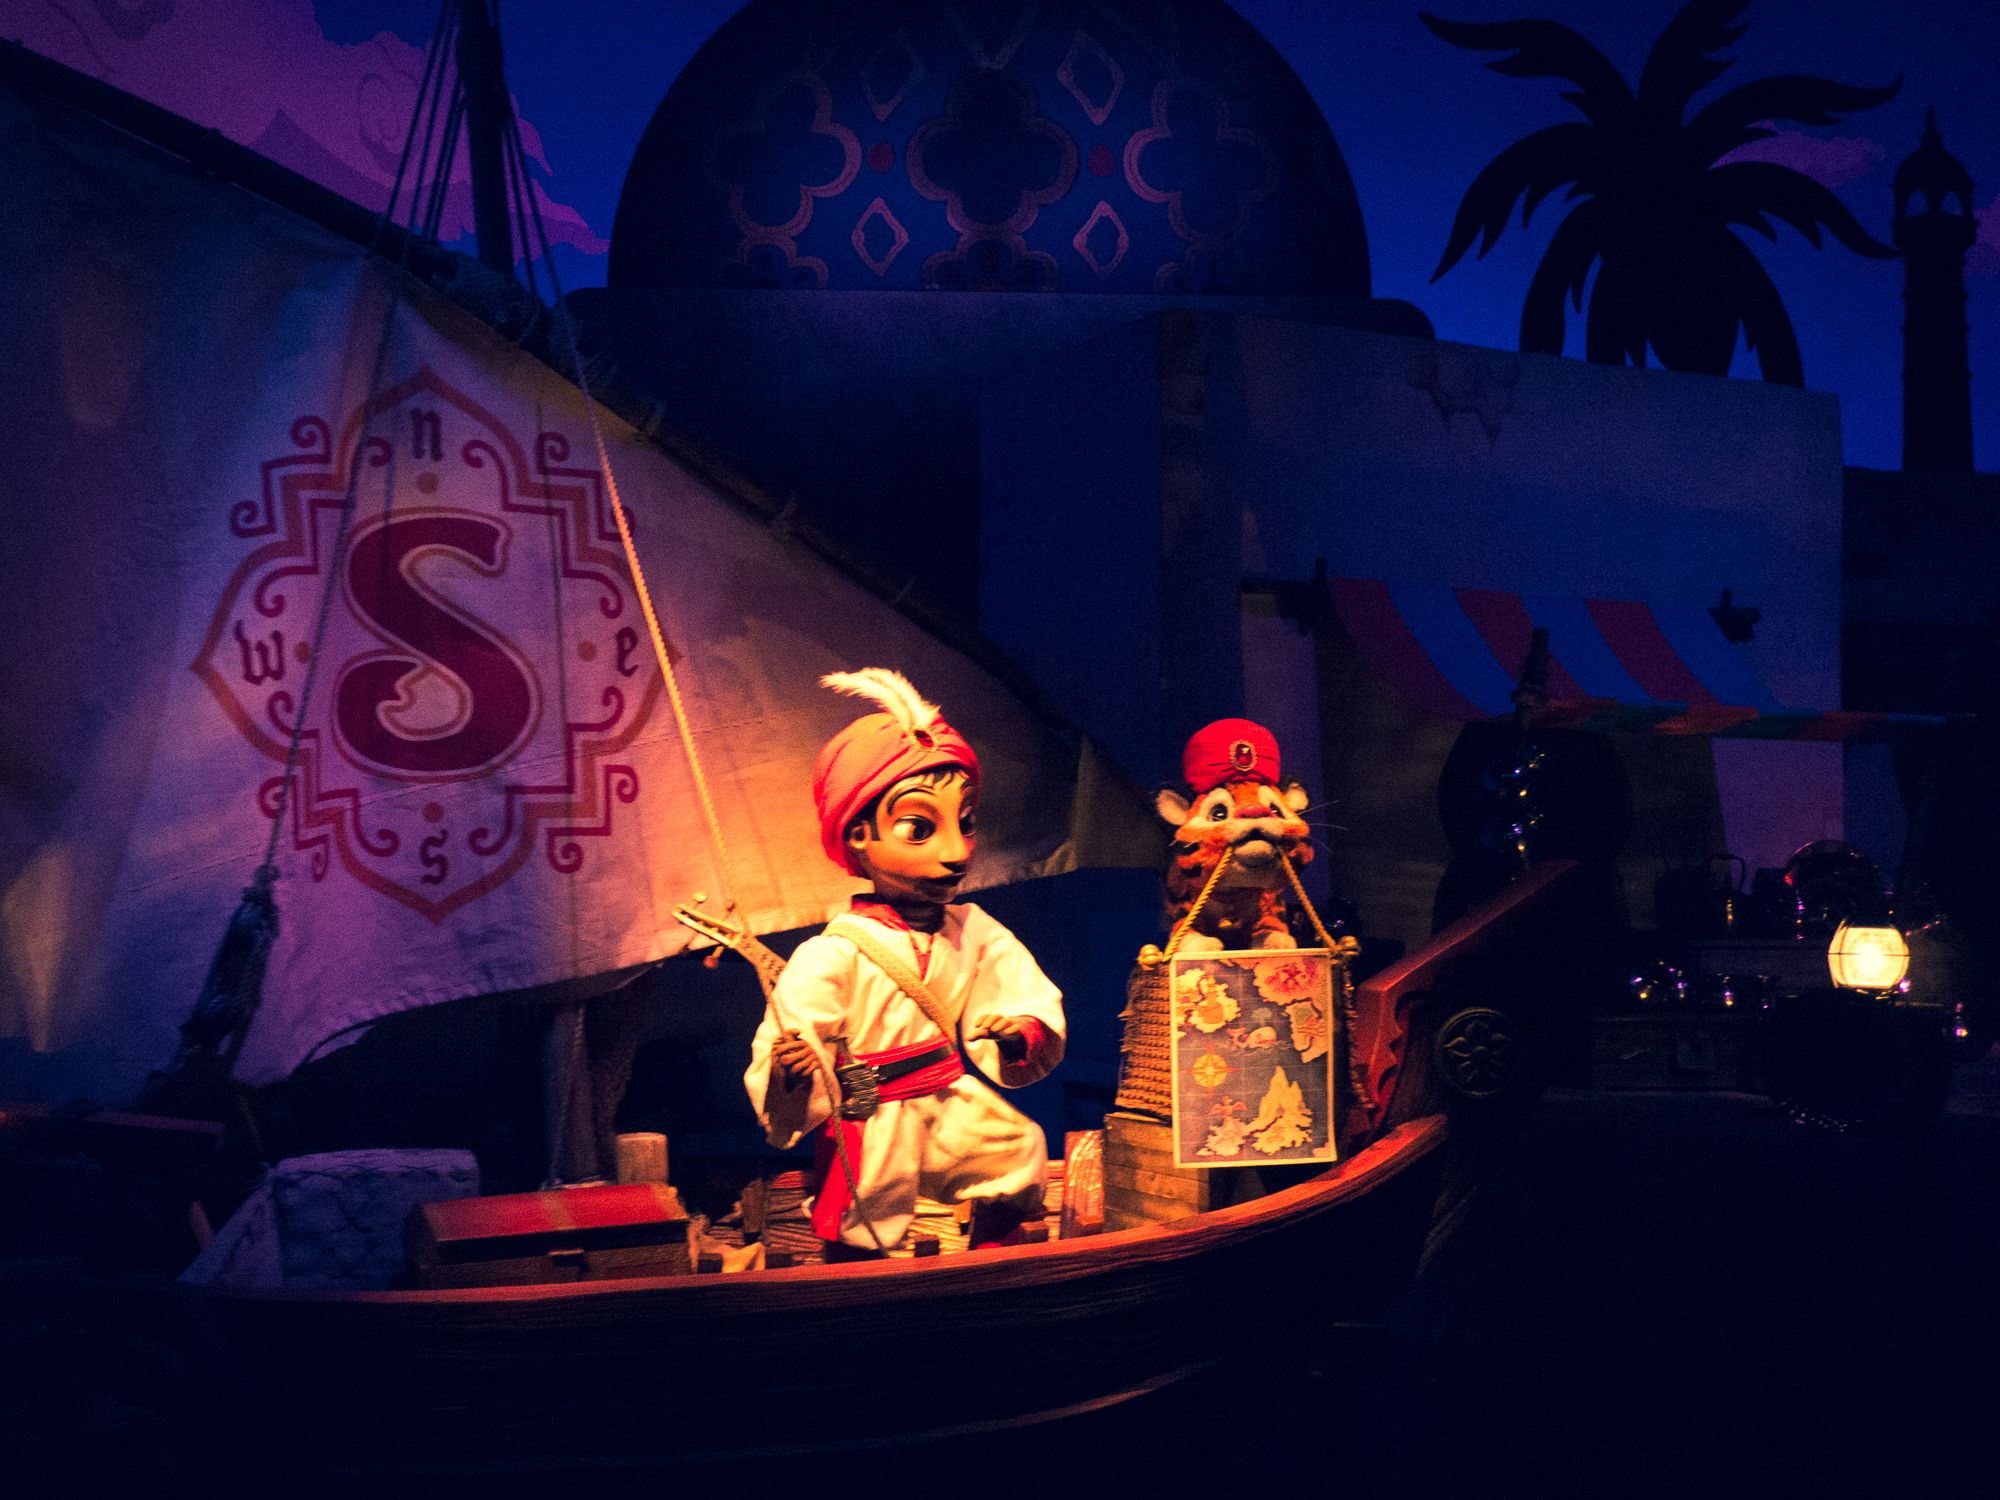 An animatronic of Sinbad from the Sinbad's Voyage ride